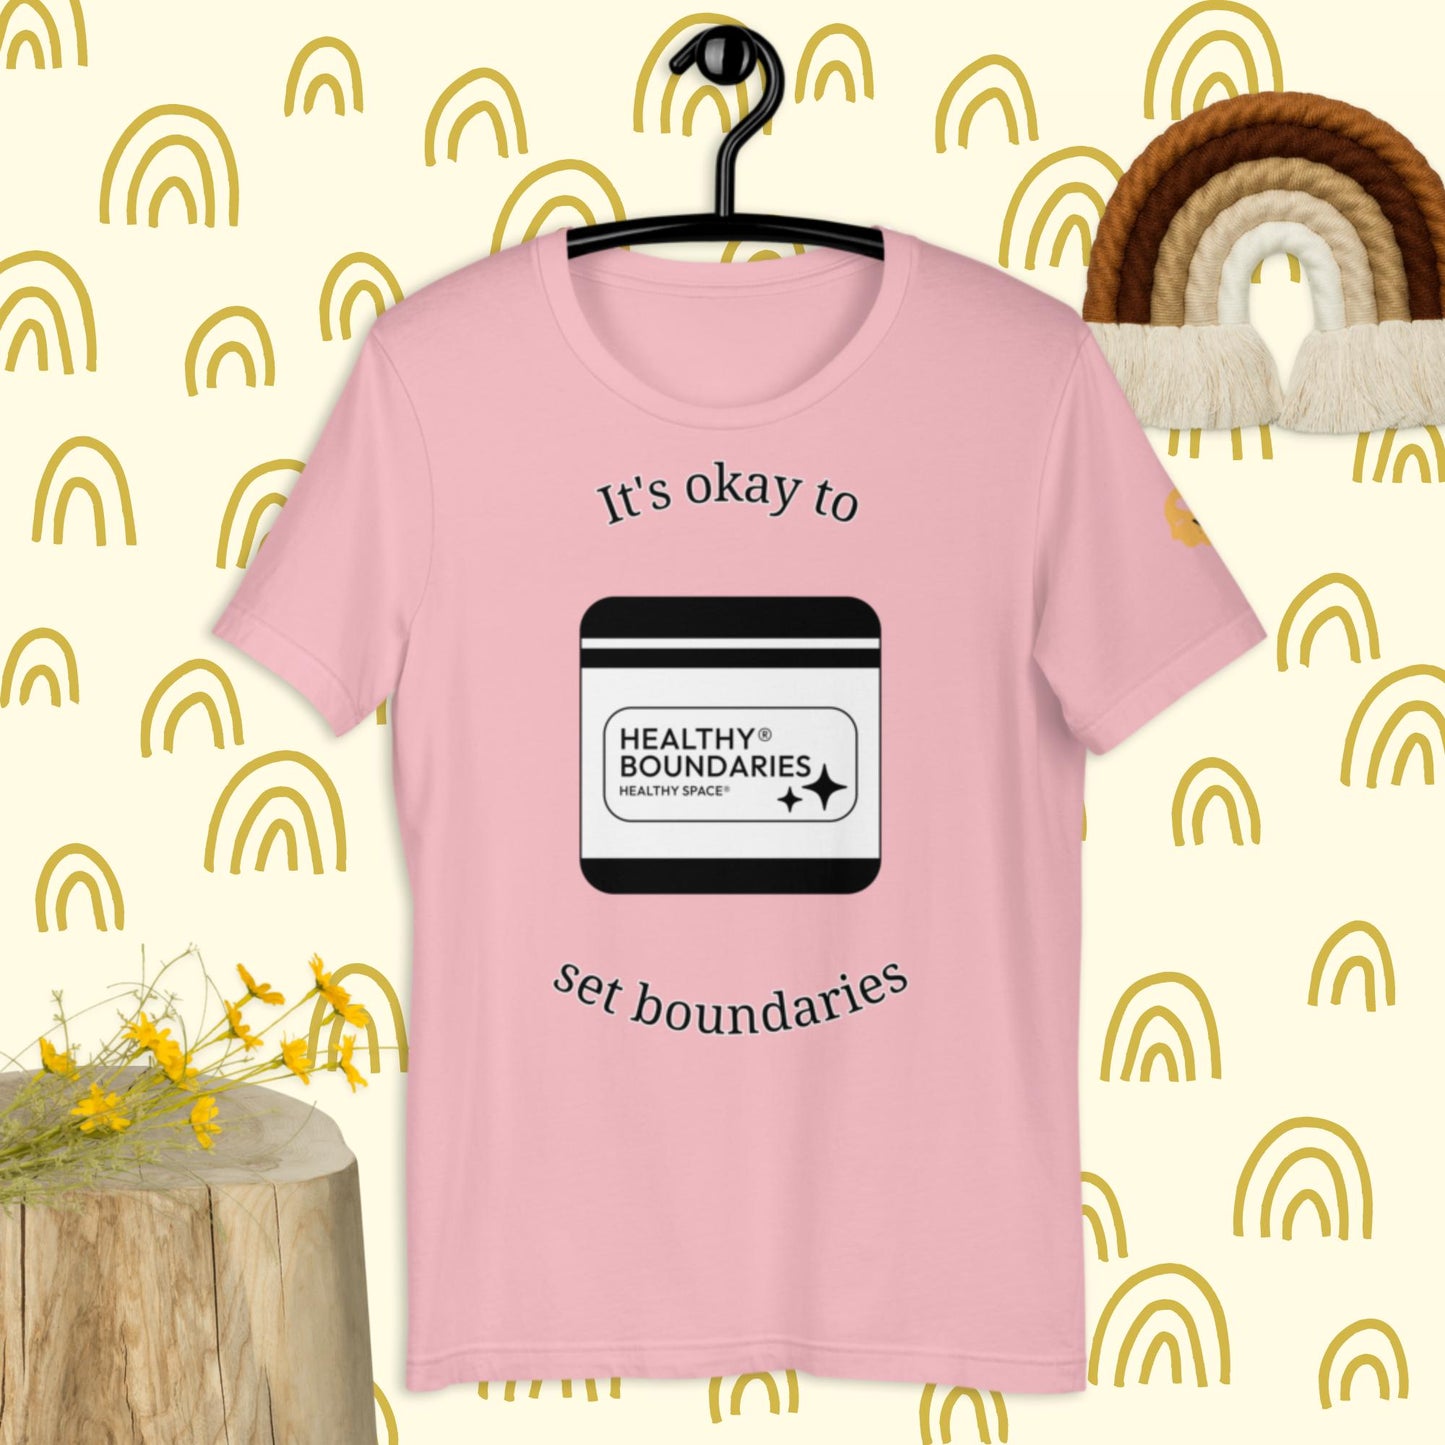 It's okay to set boundaries t-shirt